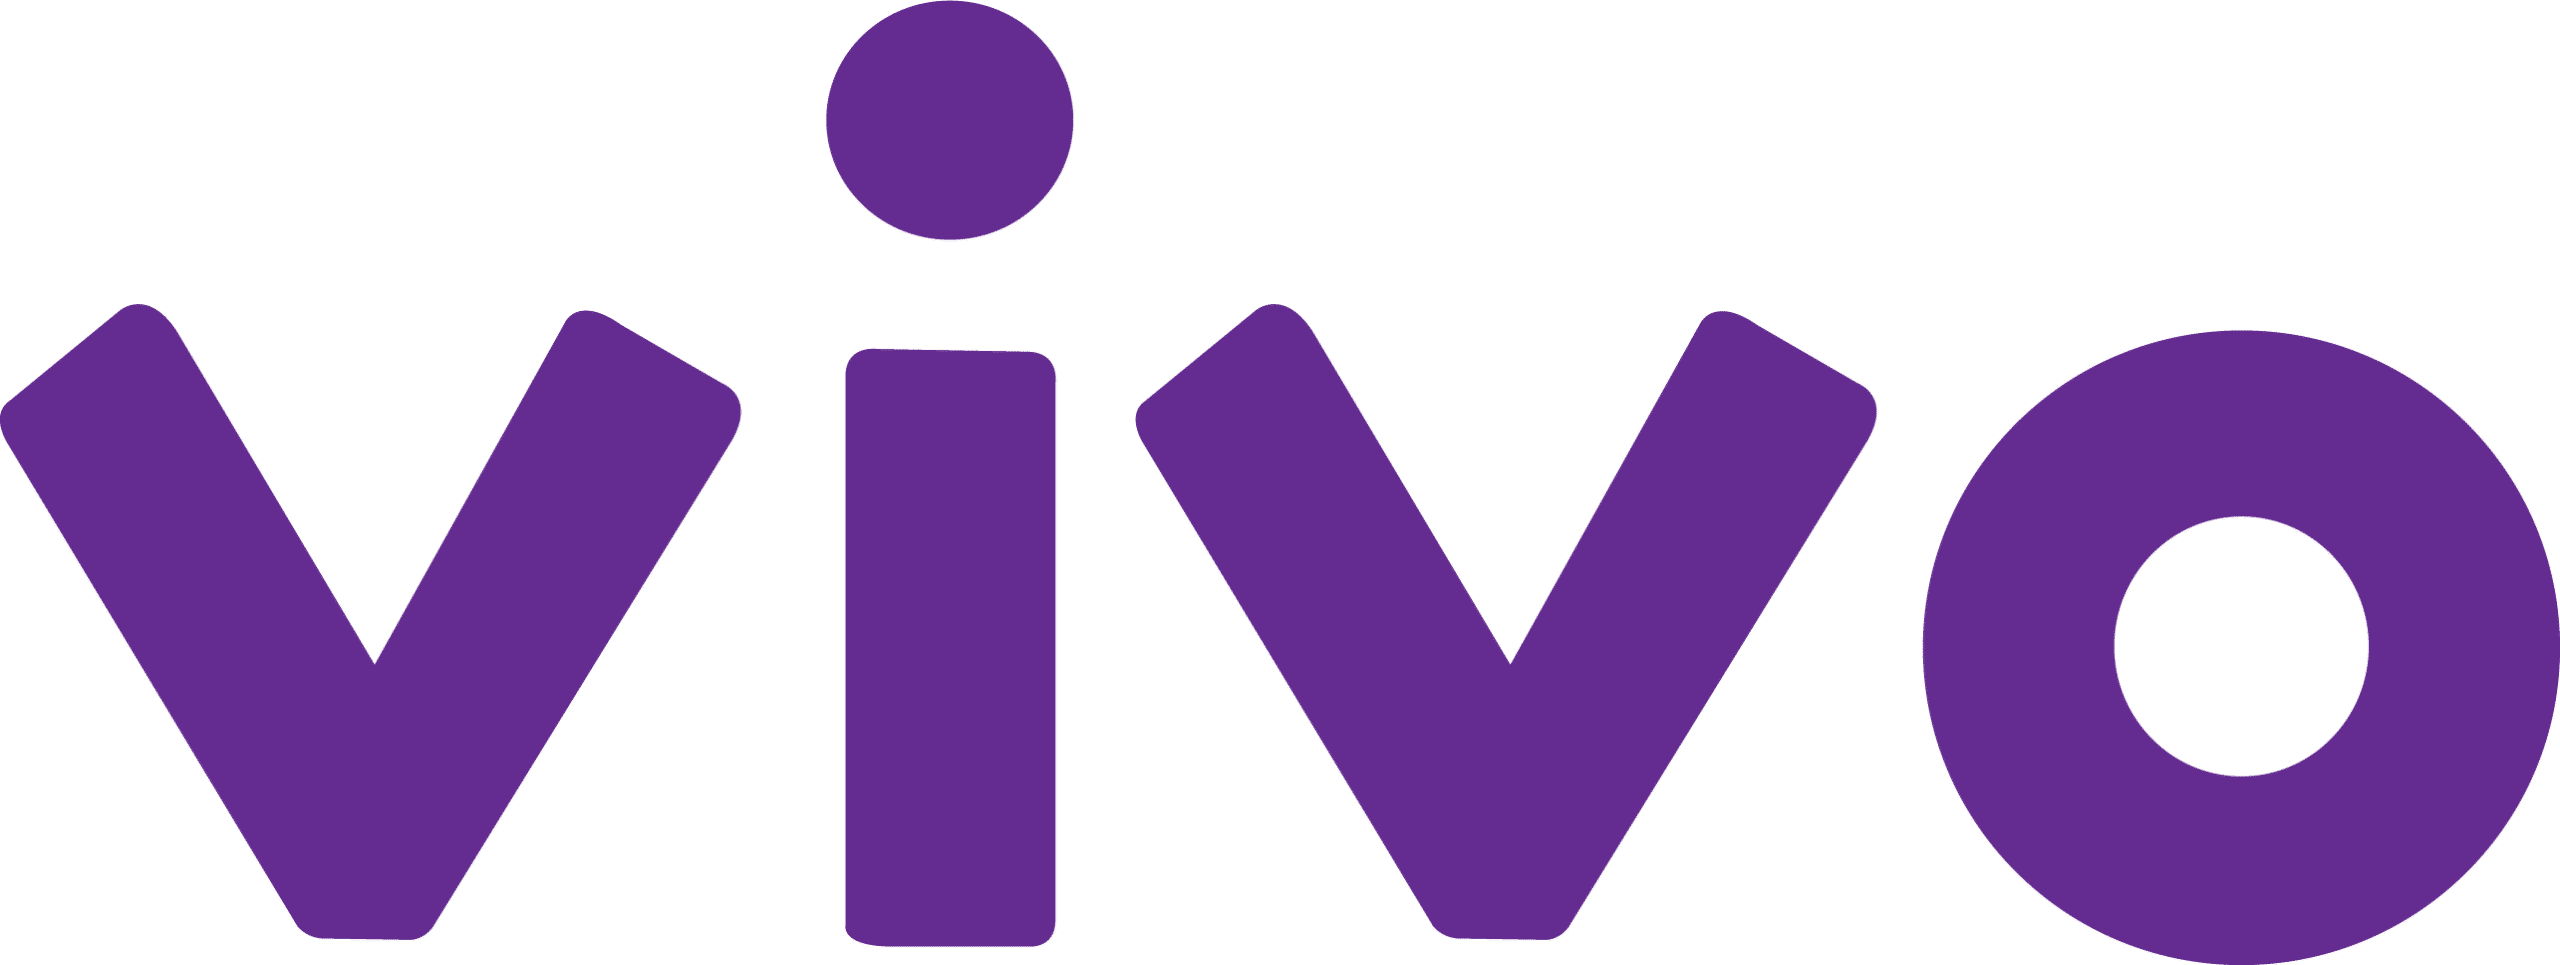 Logo_VIVO